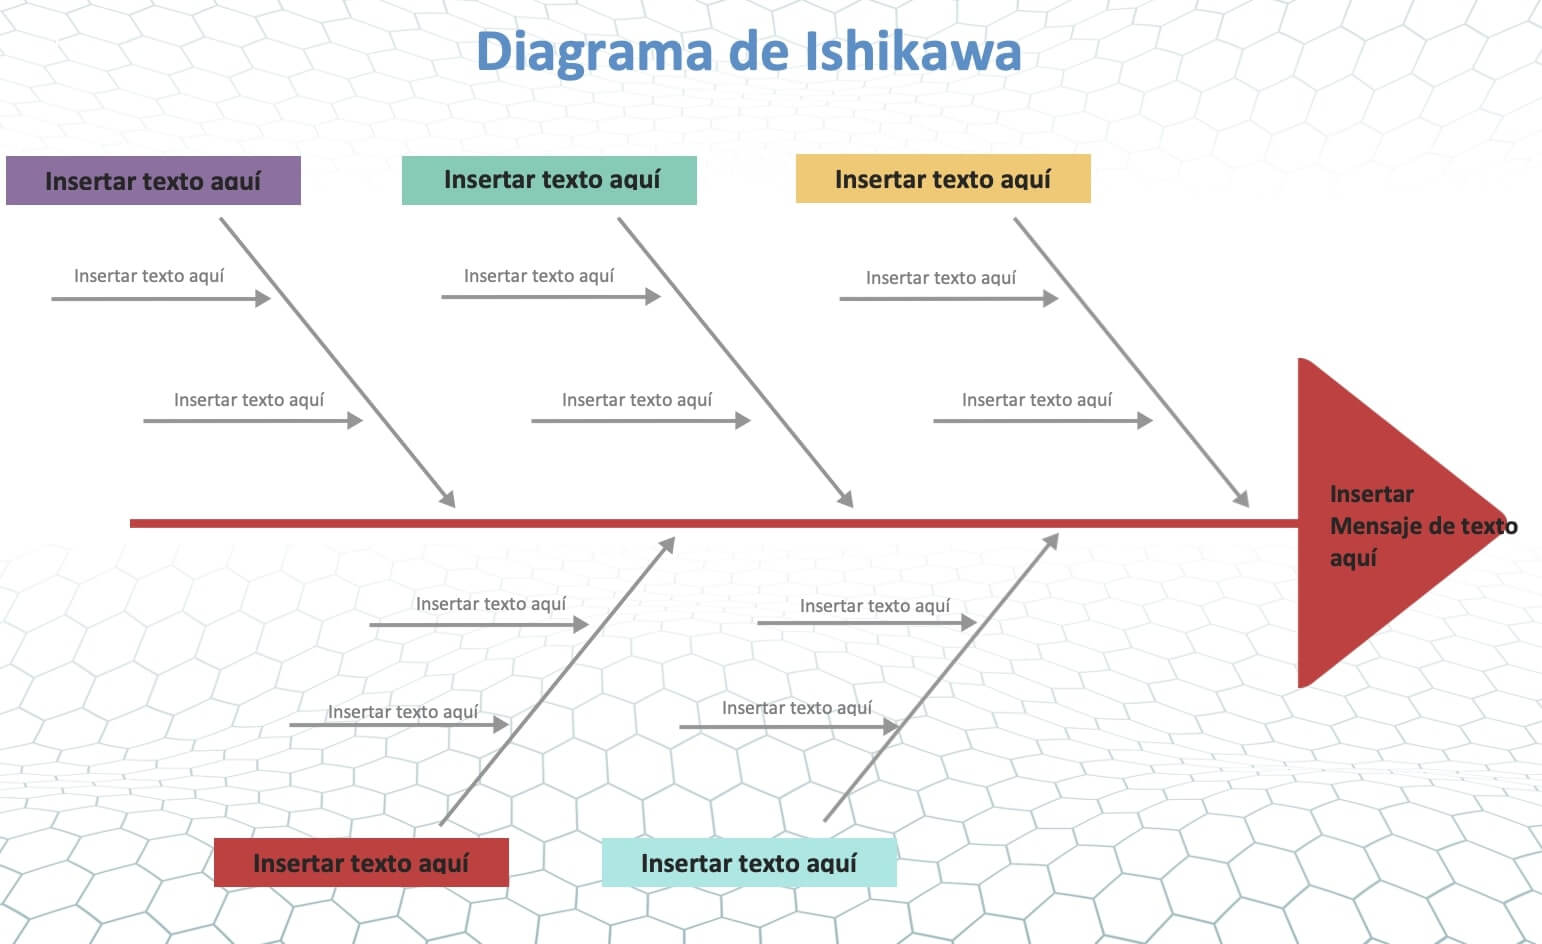 Diagrama de Ishikawa en word